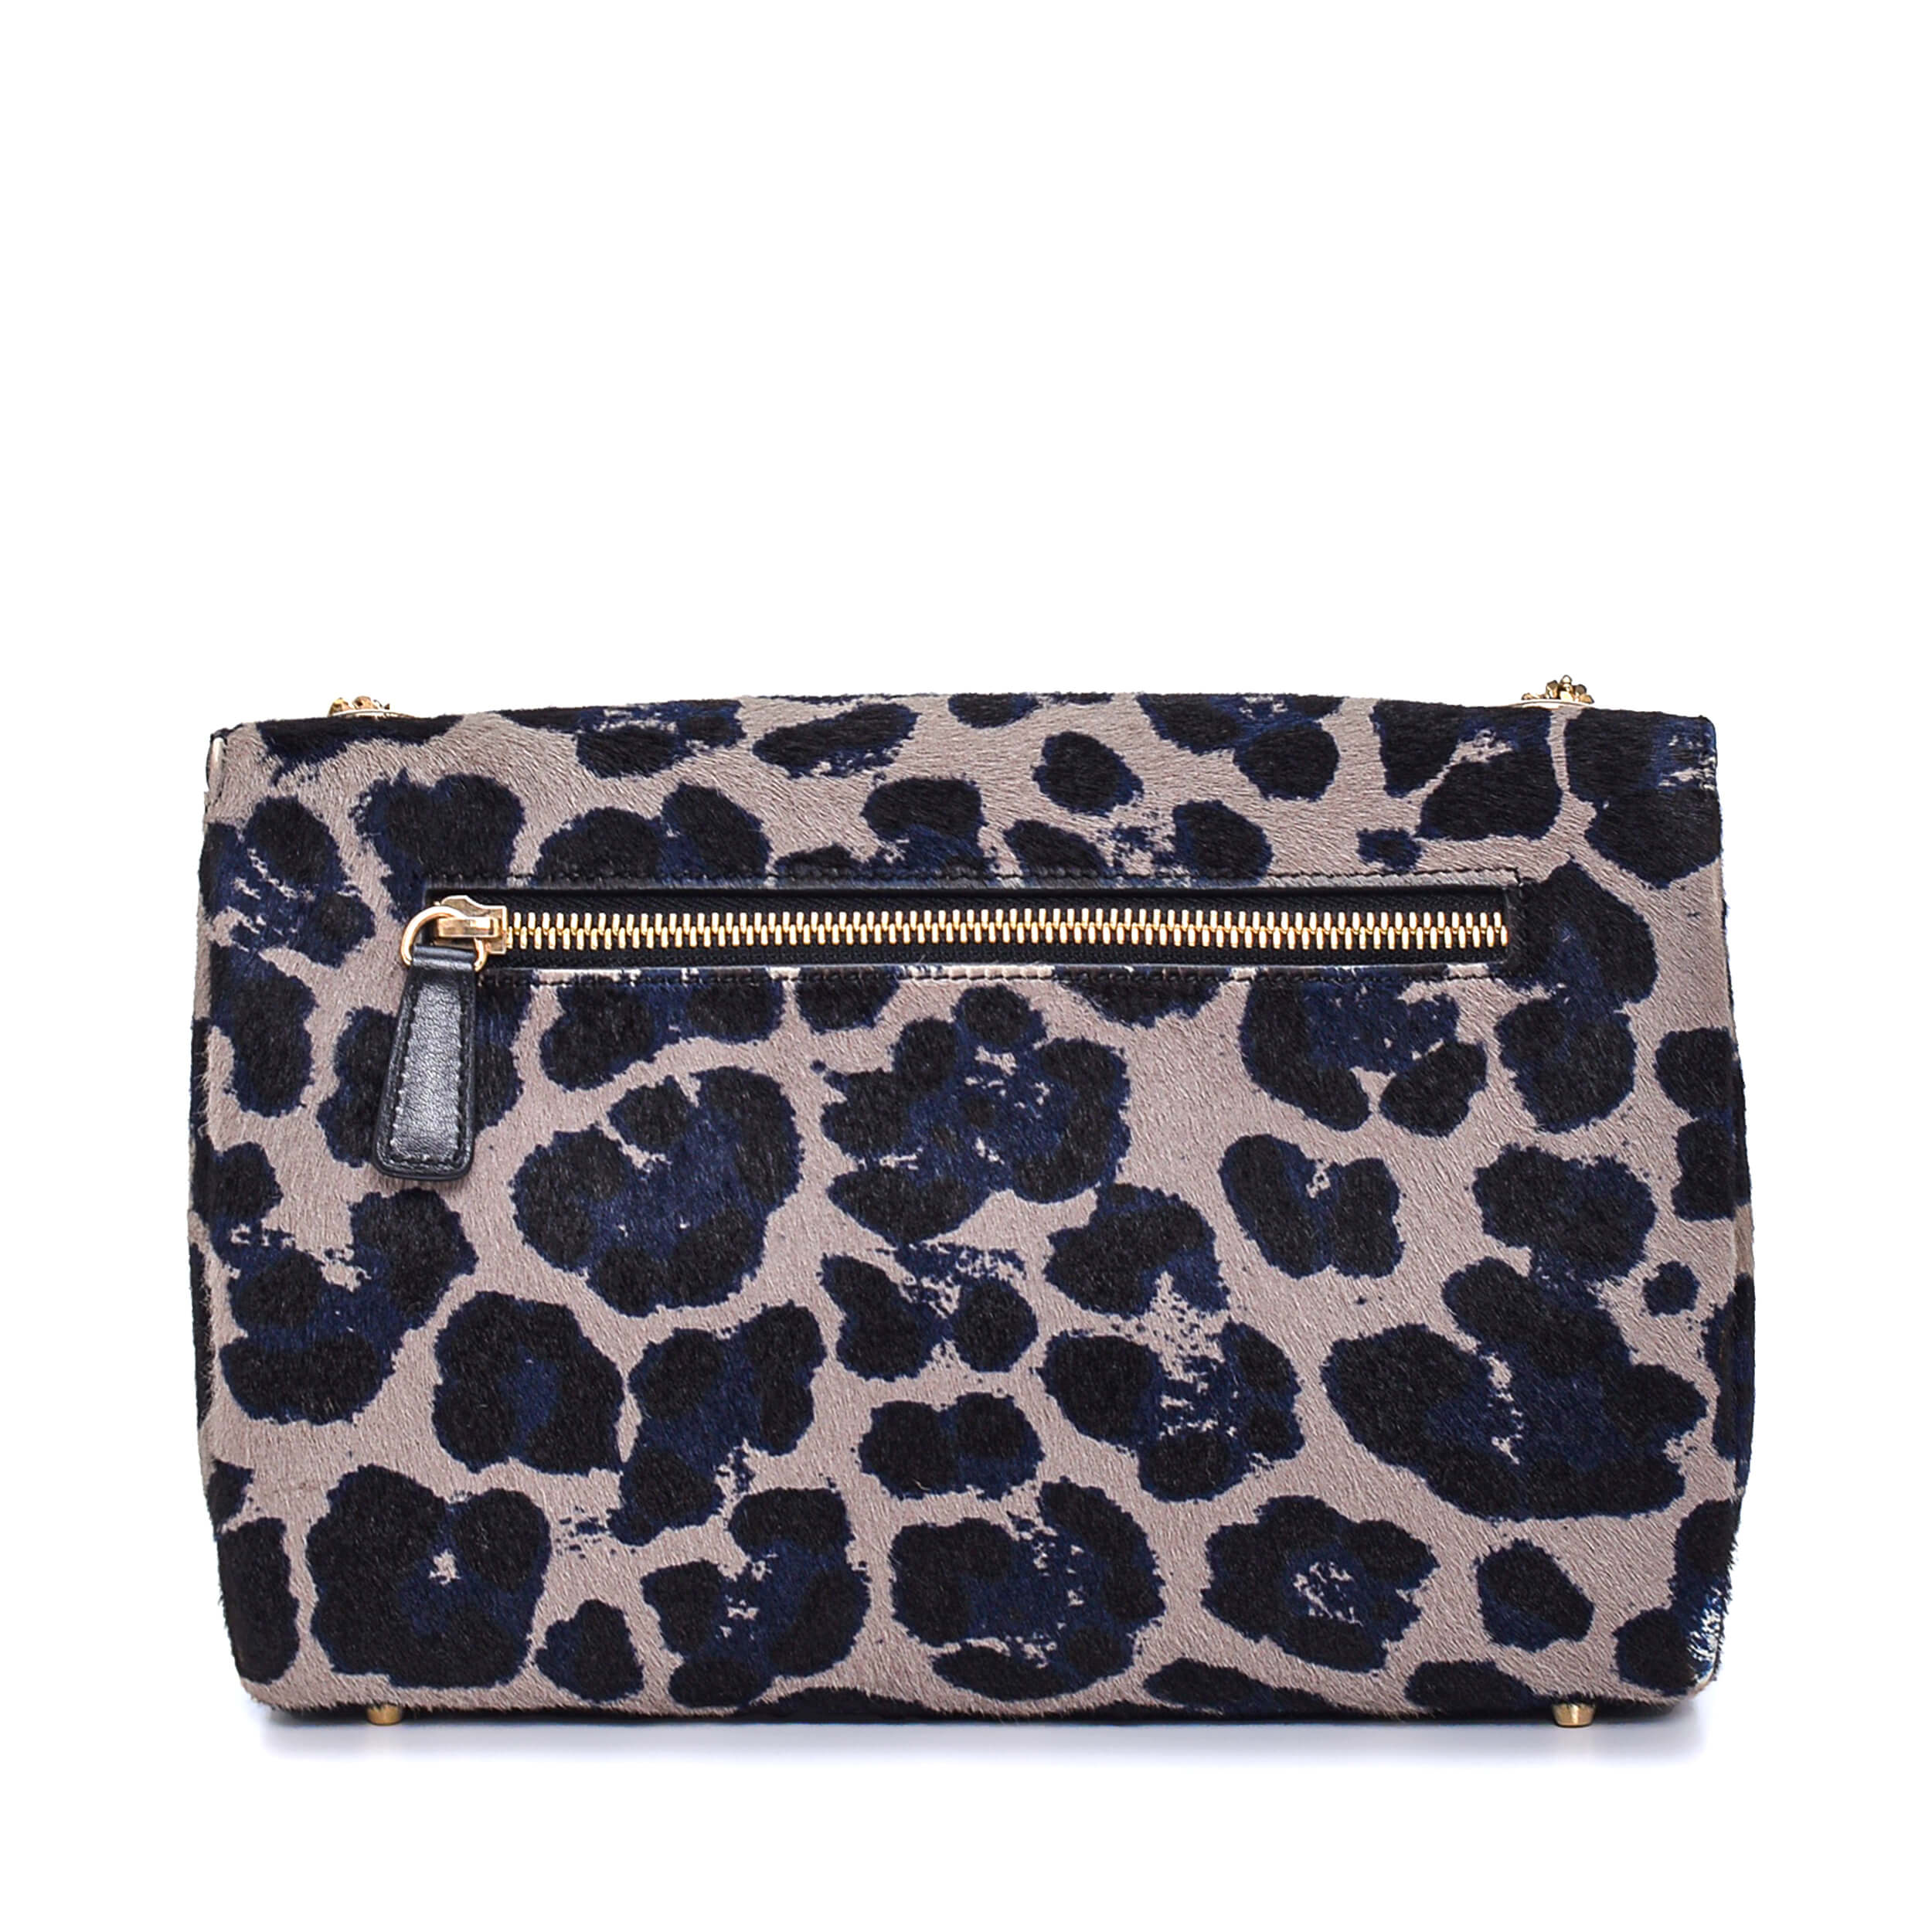 Jımmy Choo - Leopard Ponyhair Bag